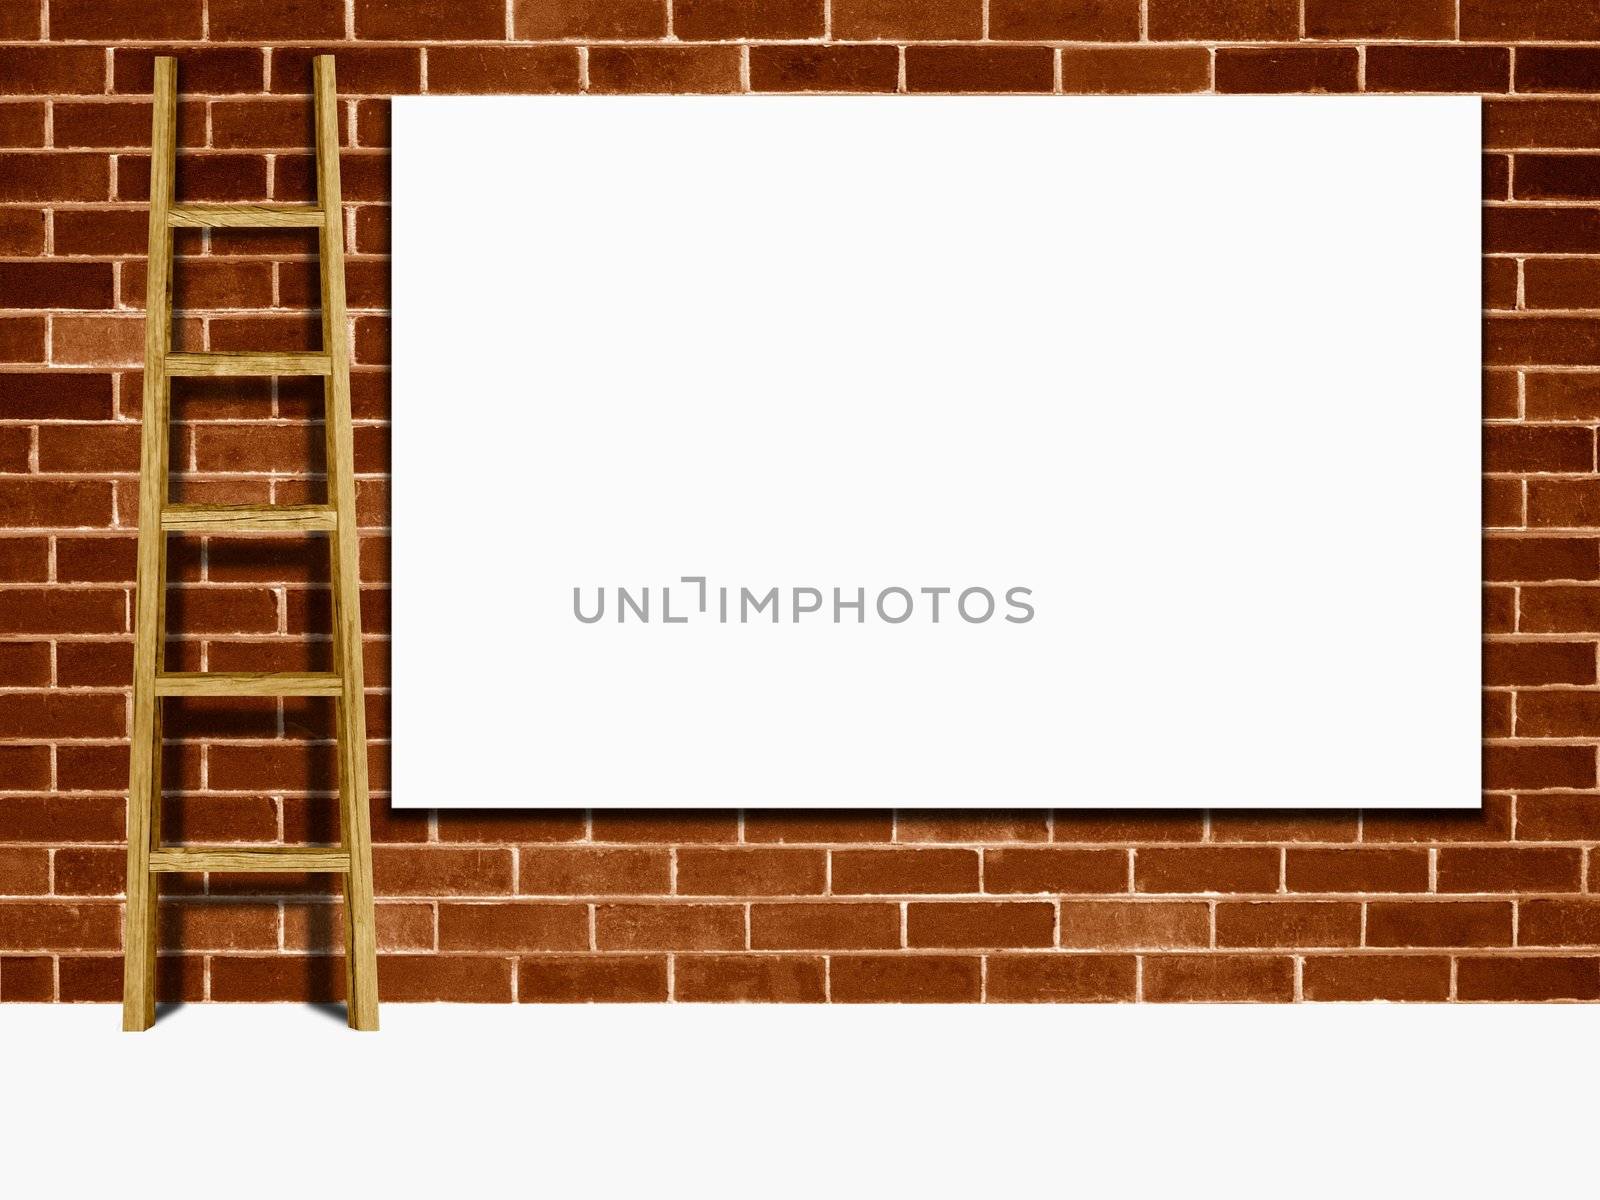 blank advertising billboard on a brick wall